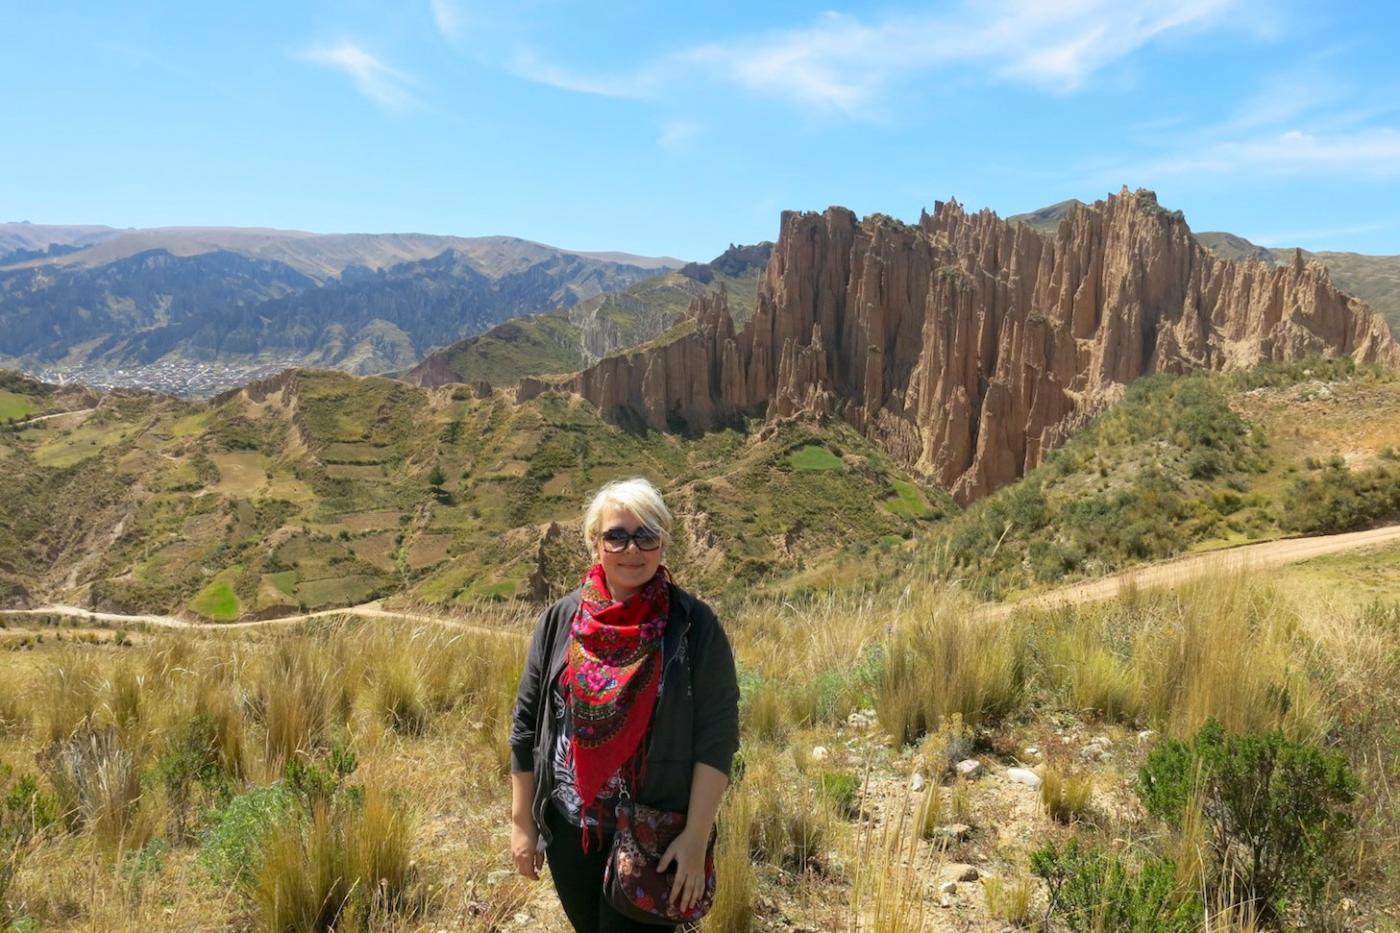 Izabela explores the area surrounding La Paz, Bolivia.